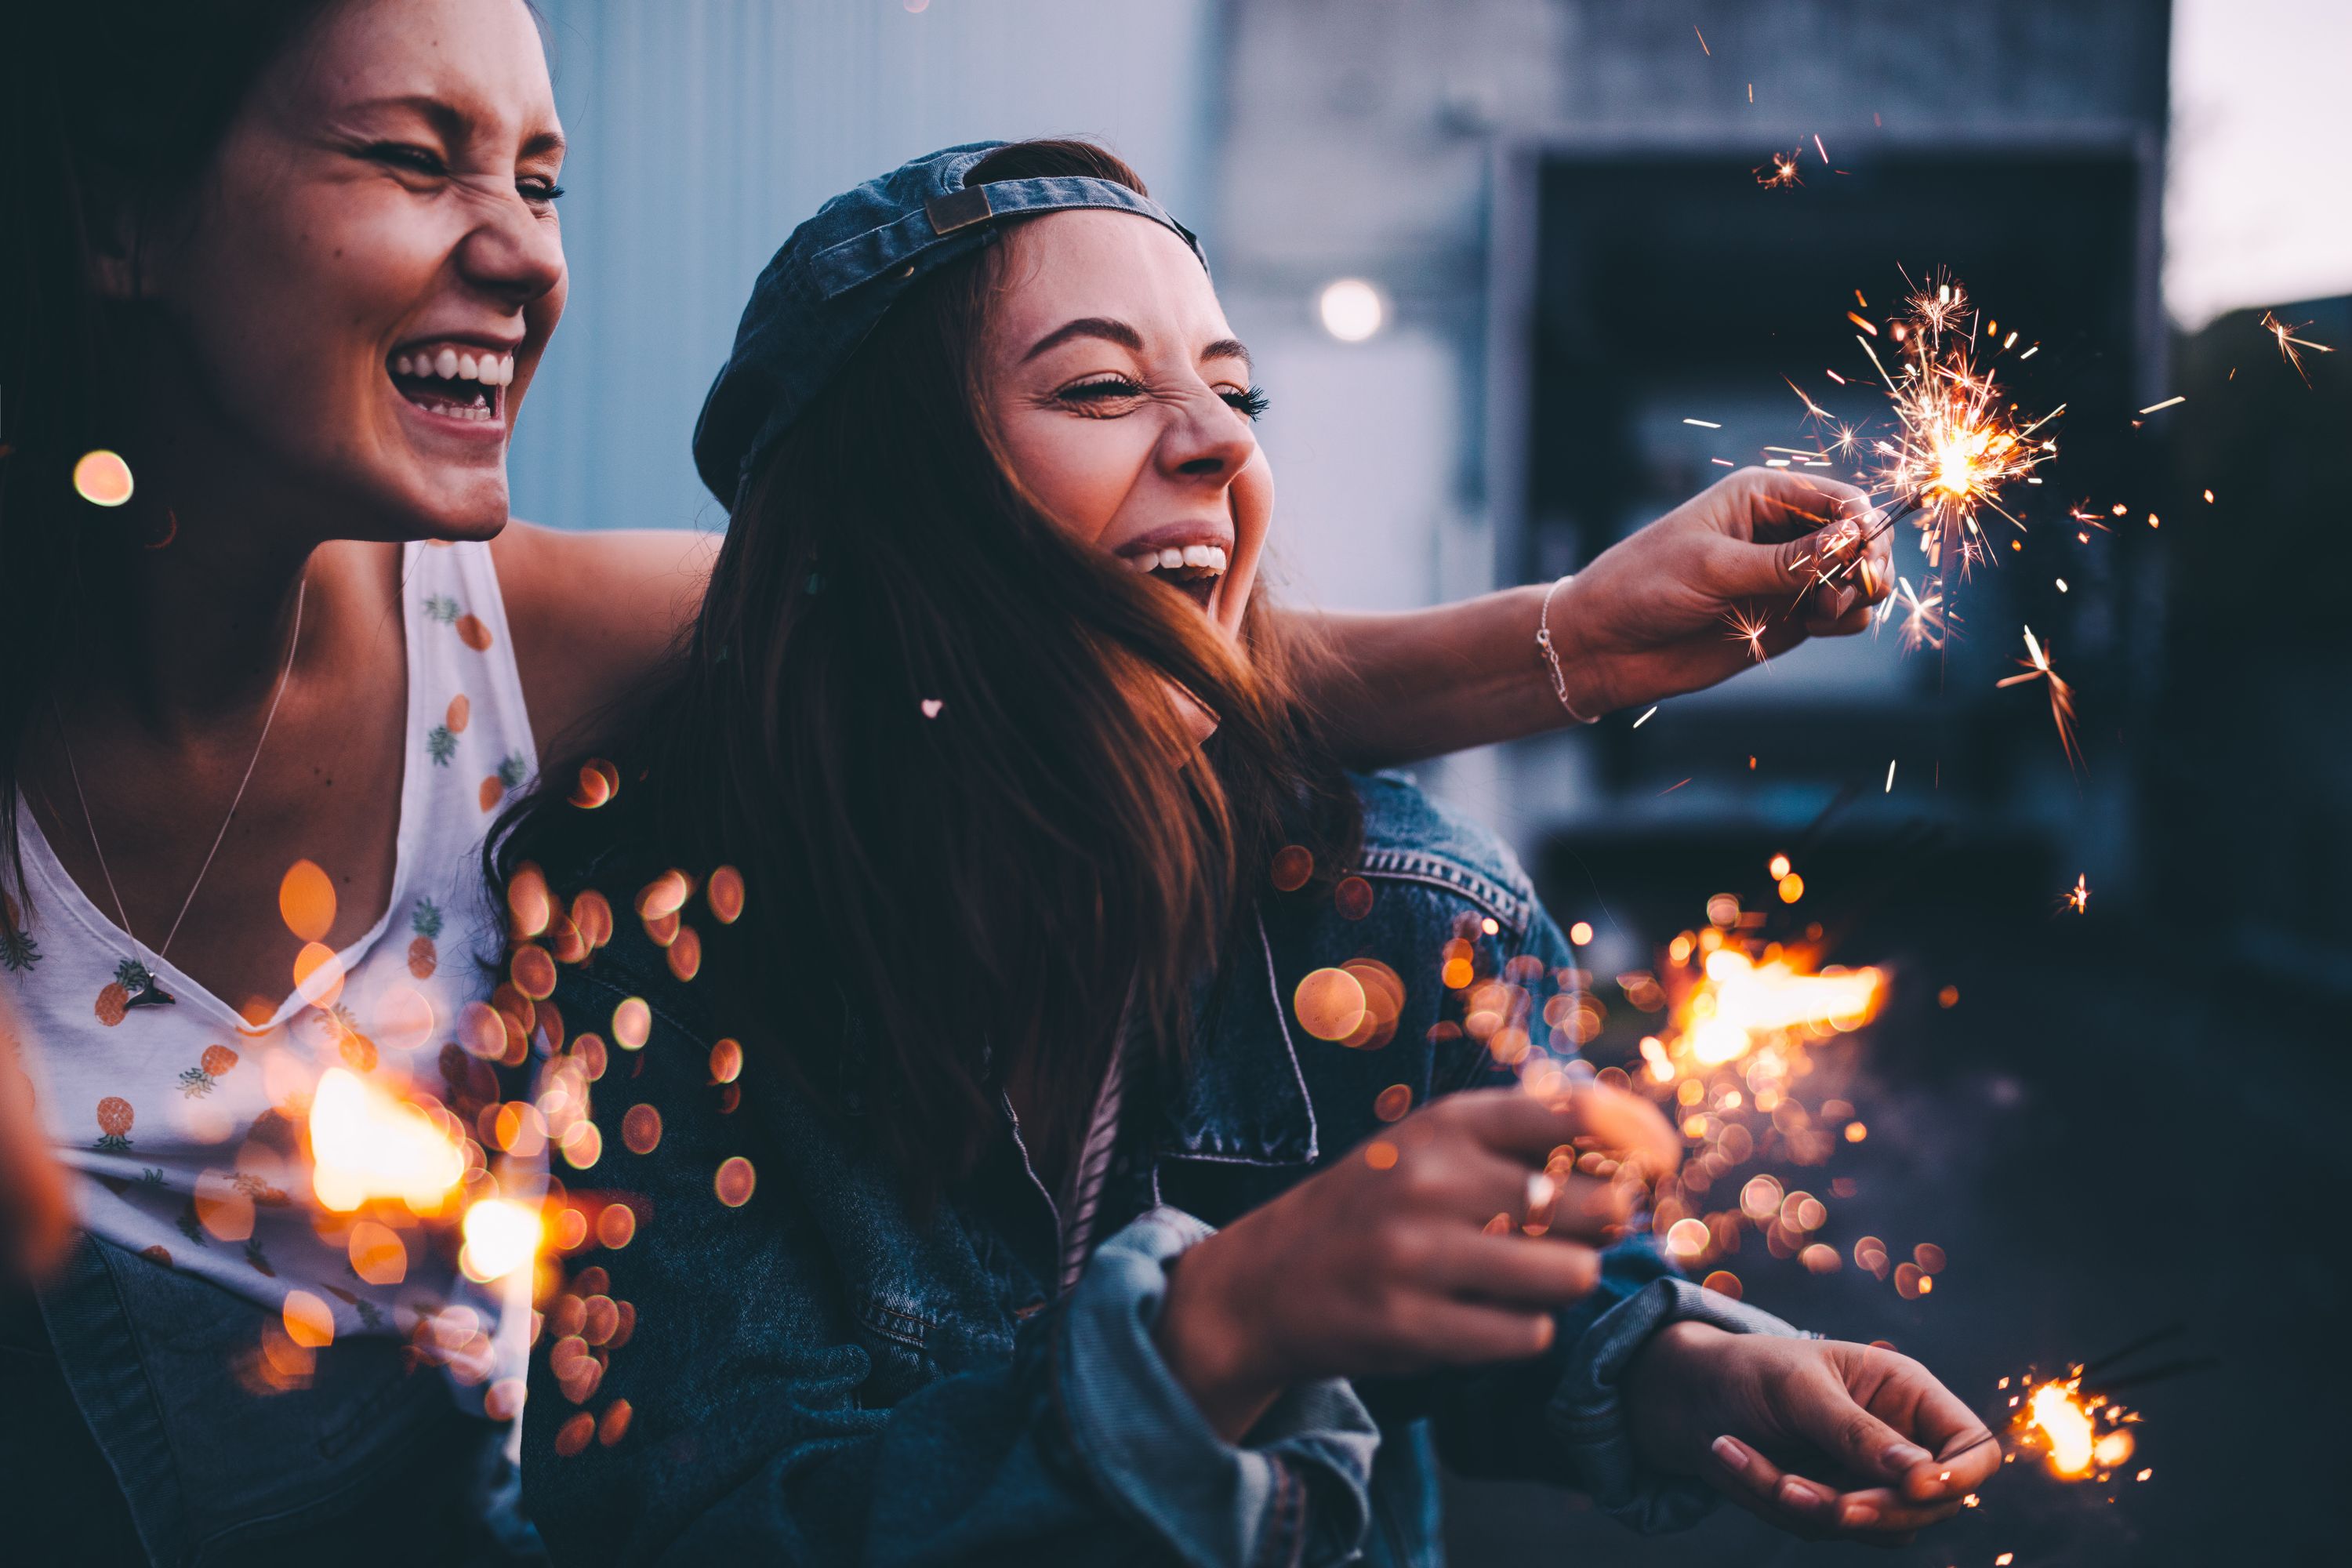 fun-happiness-sparkler-party-woman-celebrate-4th-of-july-millennials-summer-party-girl-friends_t20_4lyOrv.jpg